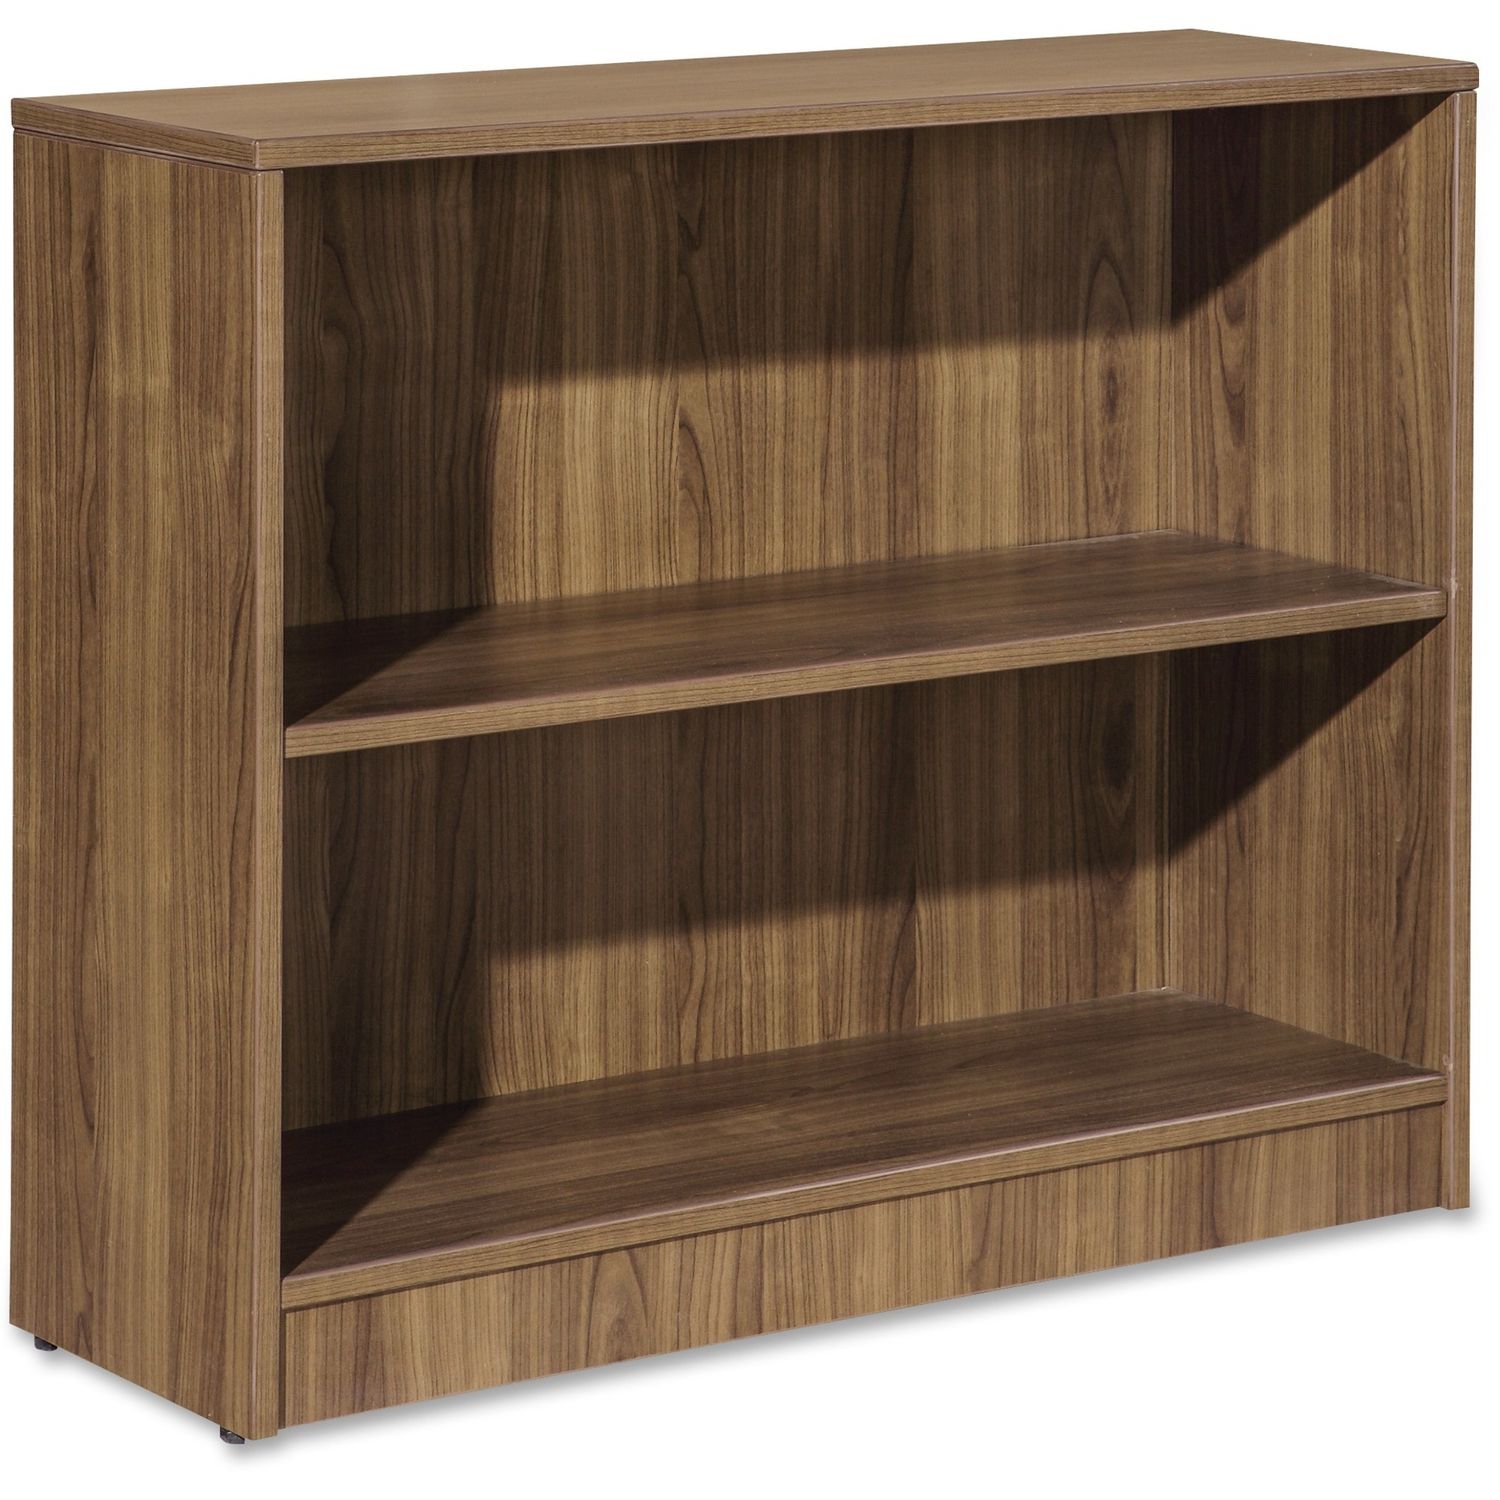 Essentials Series Walnut Laminate Bookcase 36" x 12" x 30"Shelf, 0.8" Top, 2 Shelve(s), Square Edge, Material: Medium Density Fiberboard (MDF), Finish: Walnut, Thermofused Laminate (TFL)